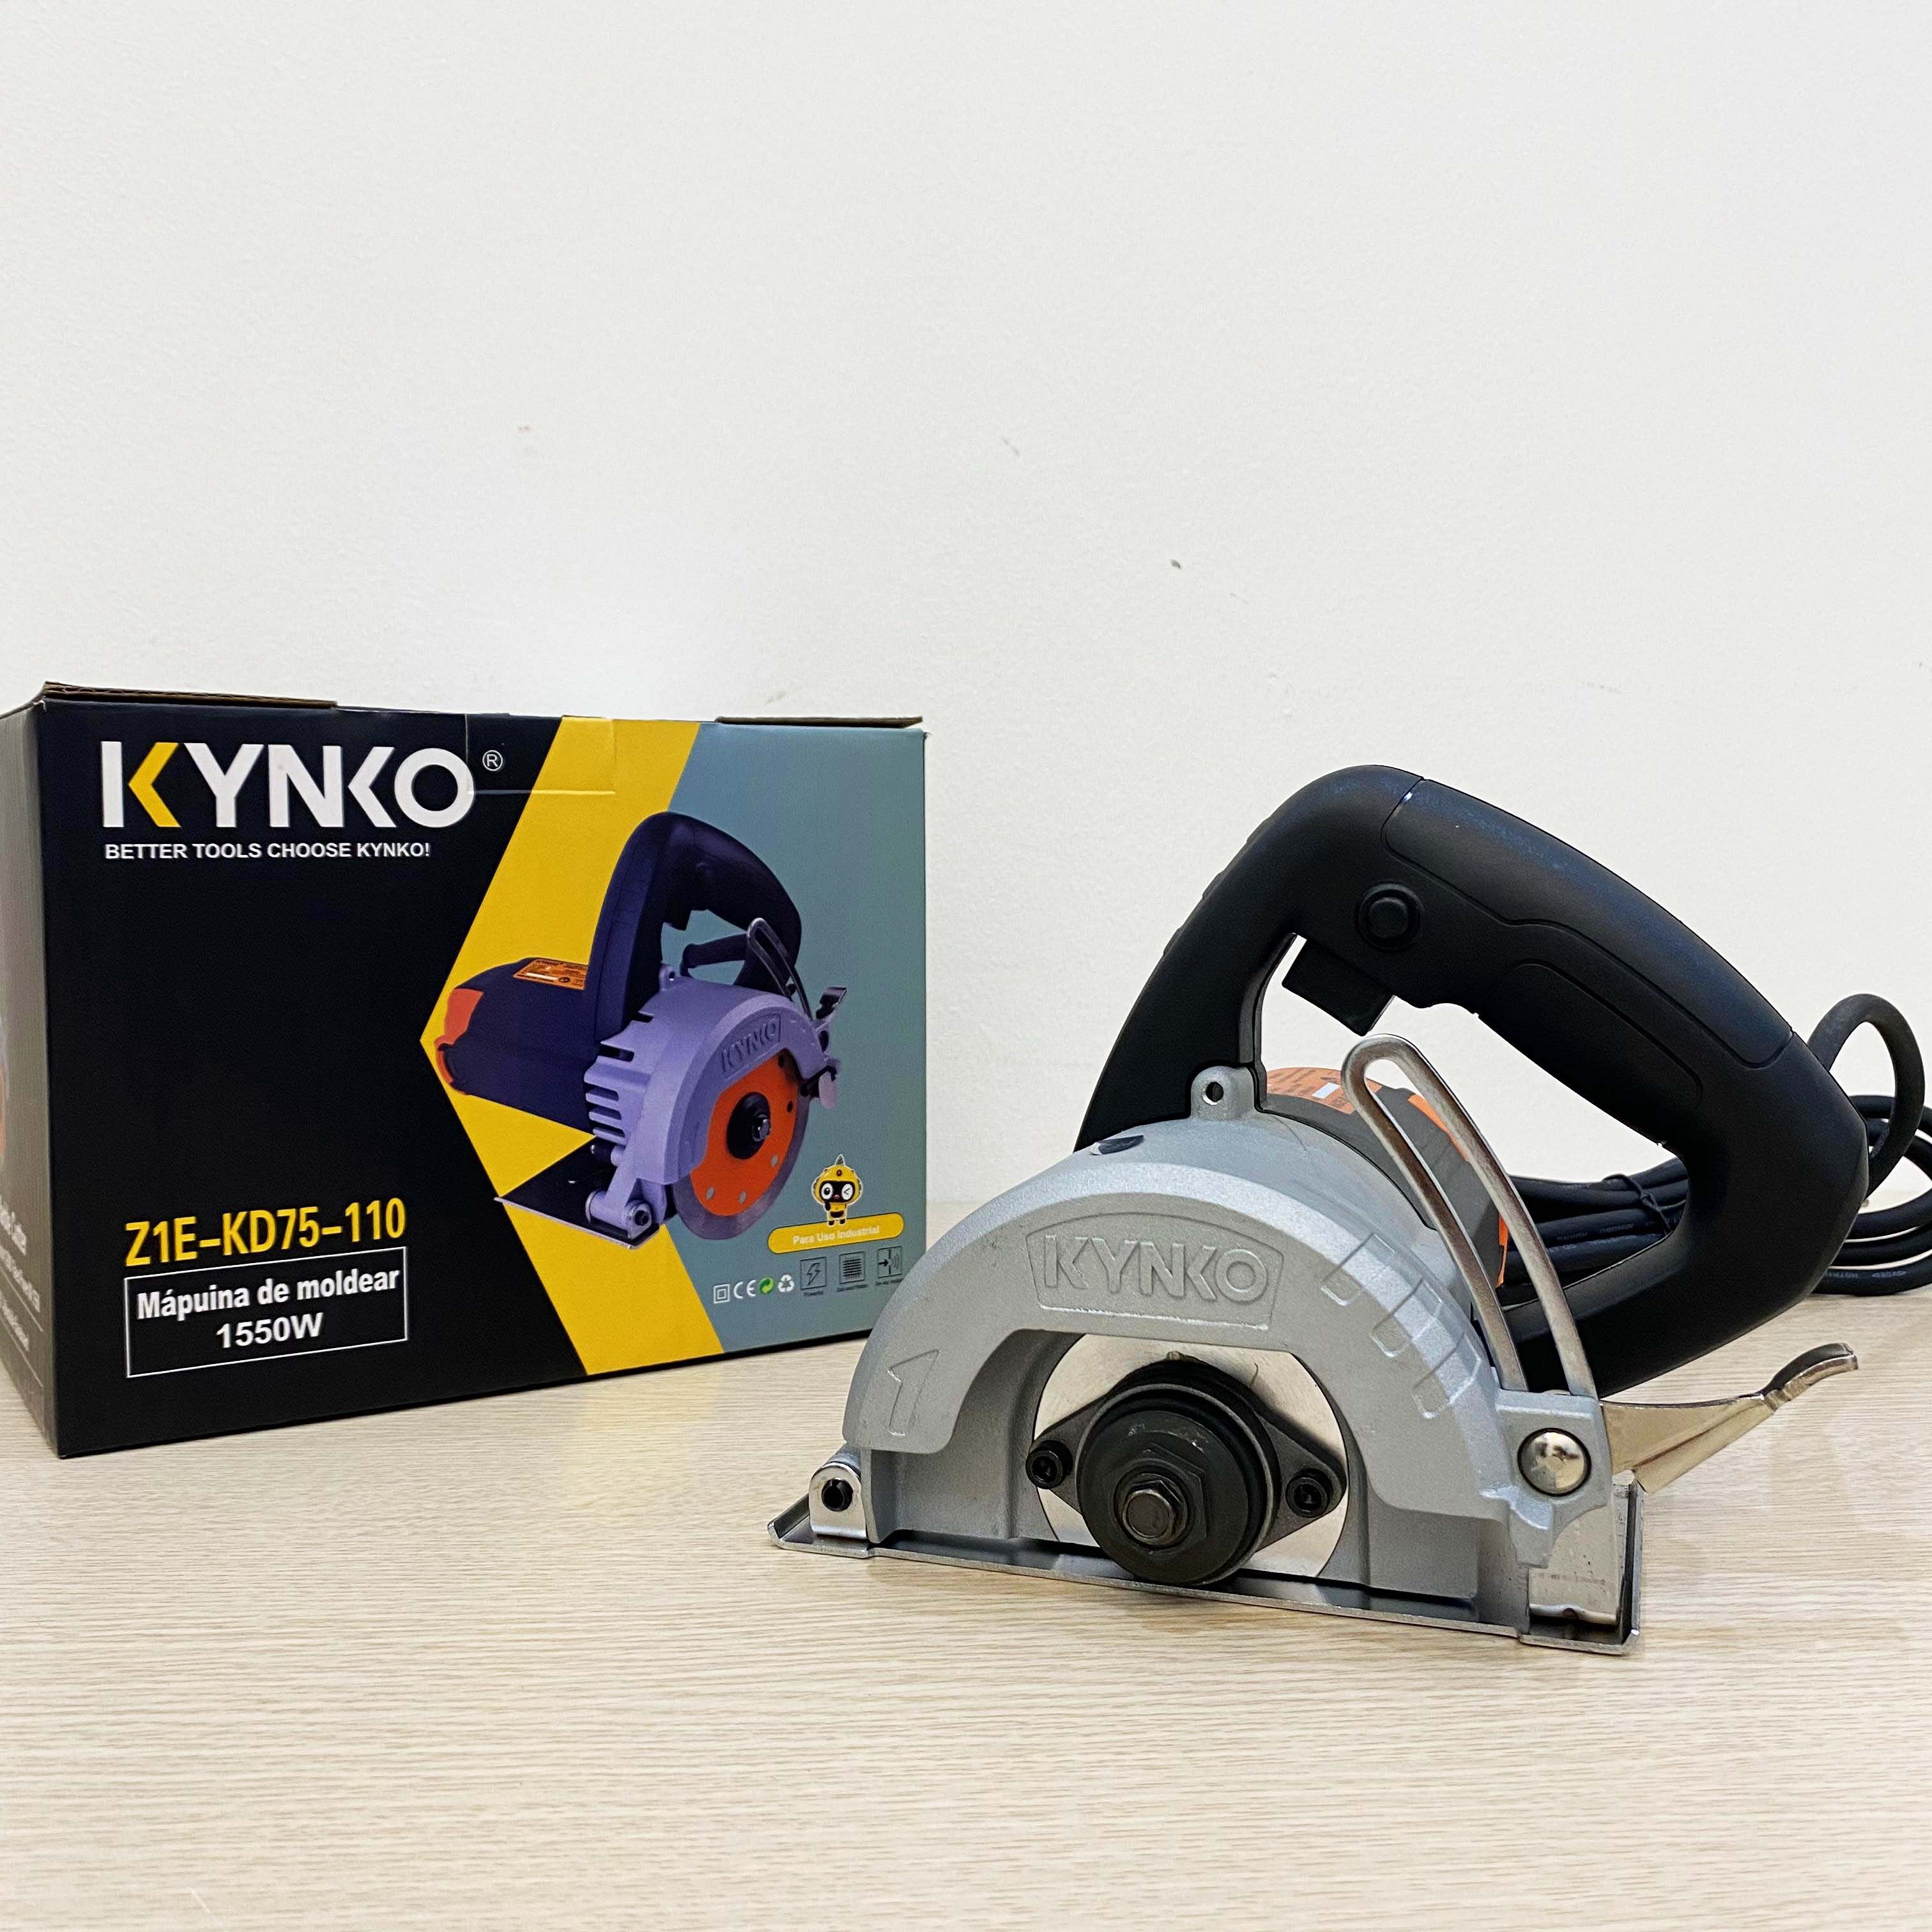 Máy cắt gạch cầm tay chính hãng Kynko Z1E-KD75-110 #6751